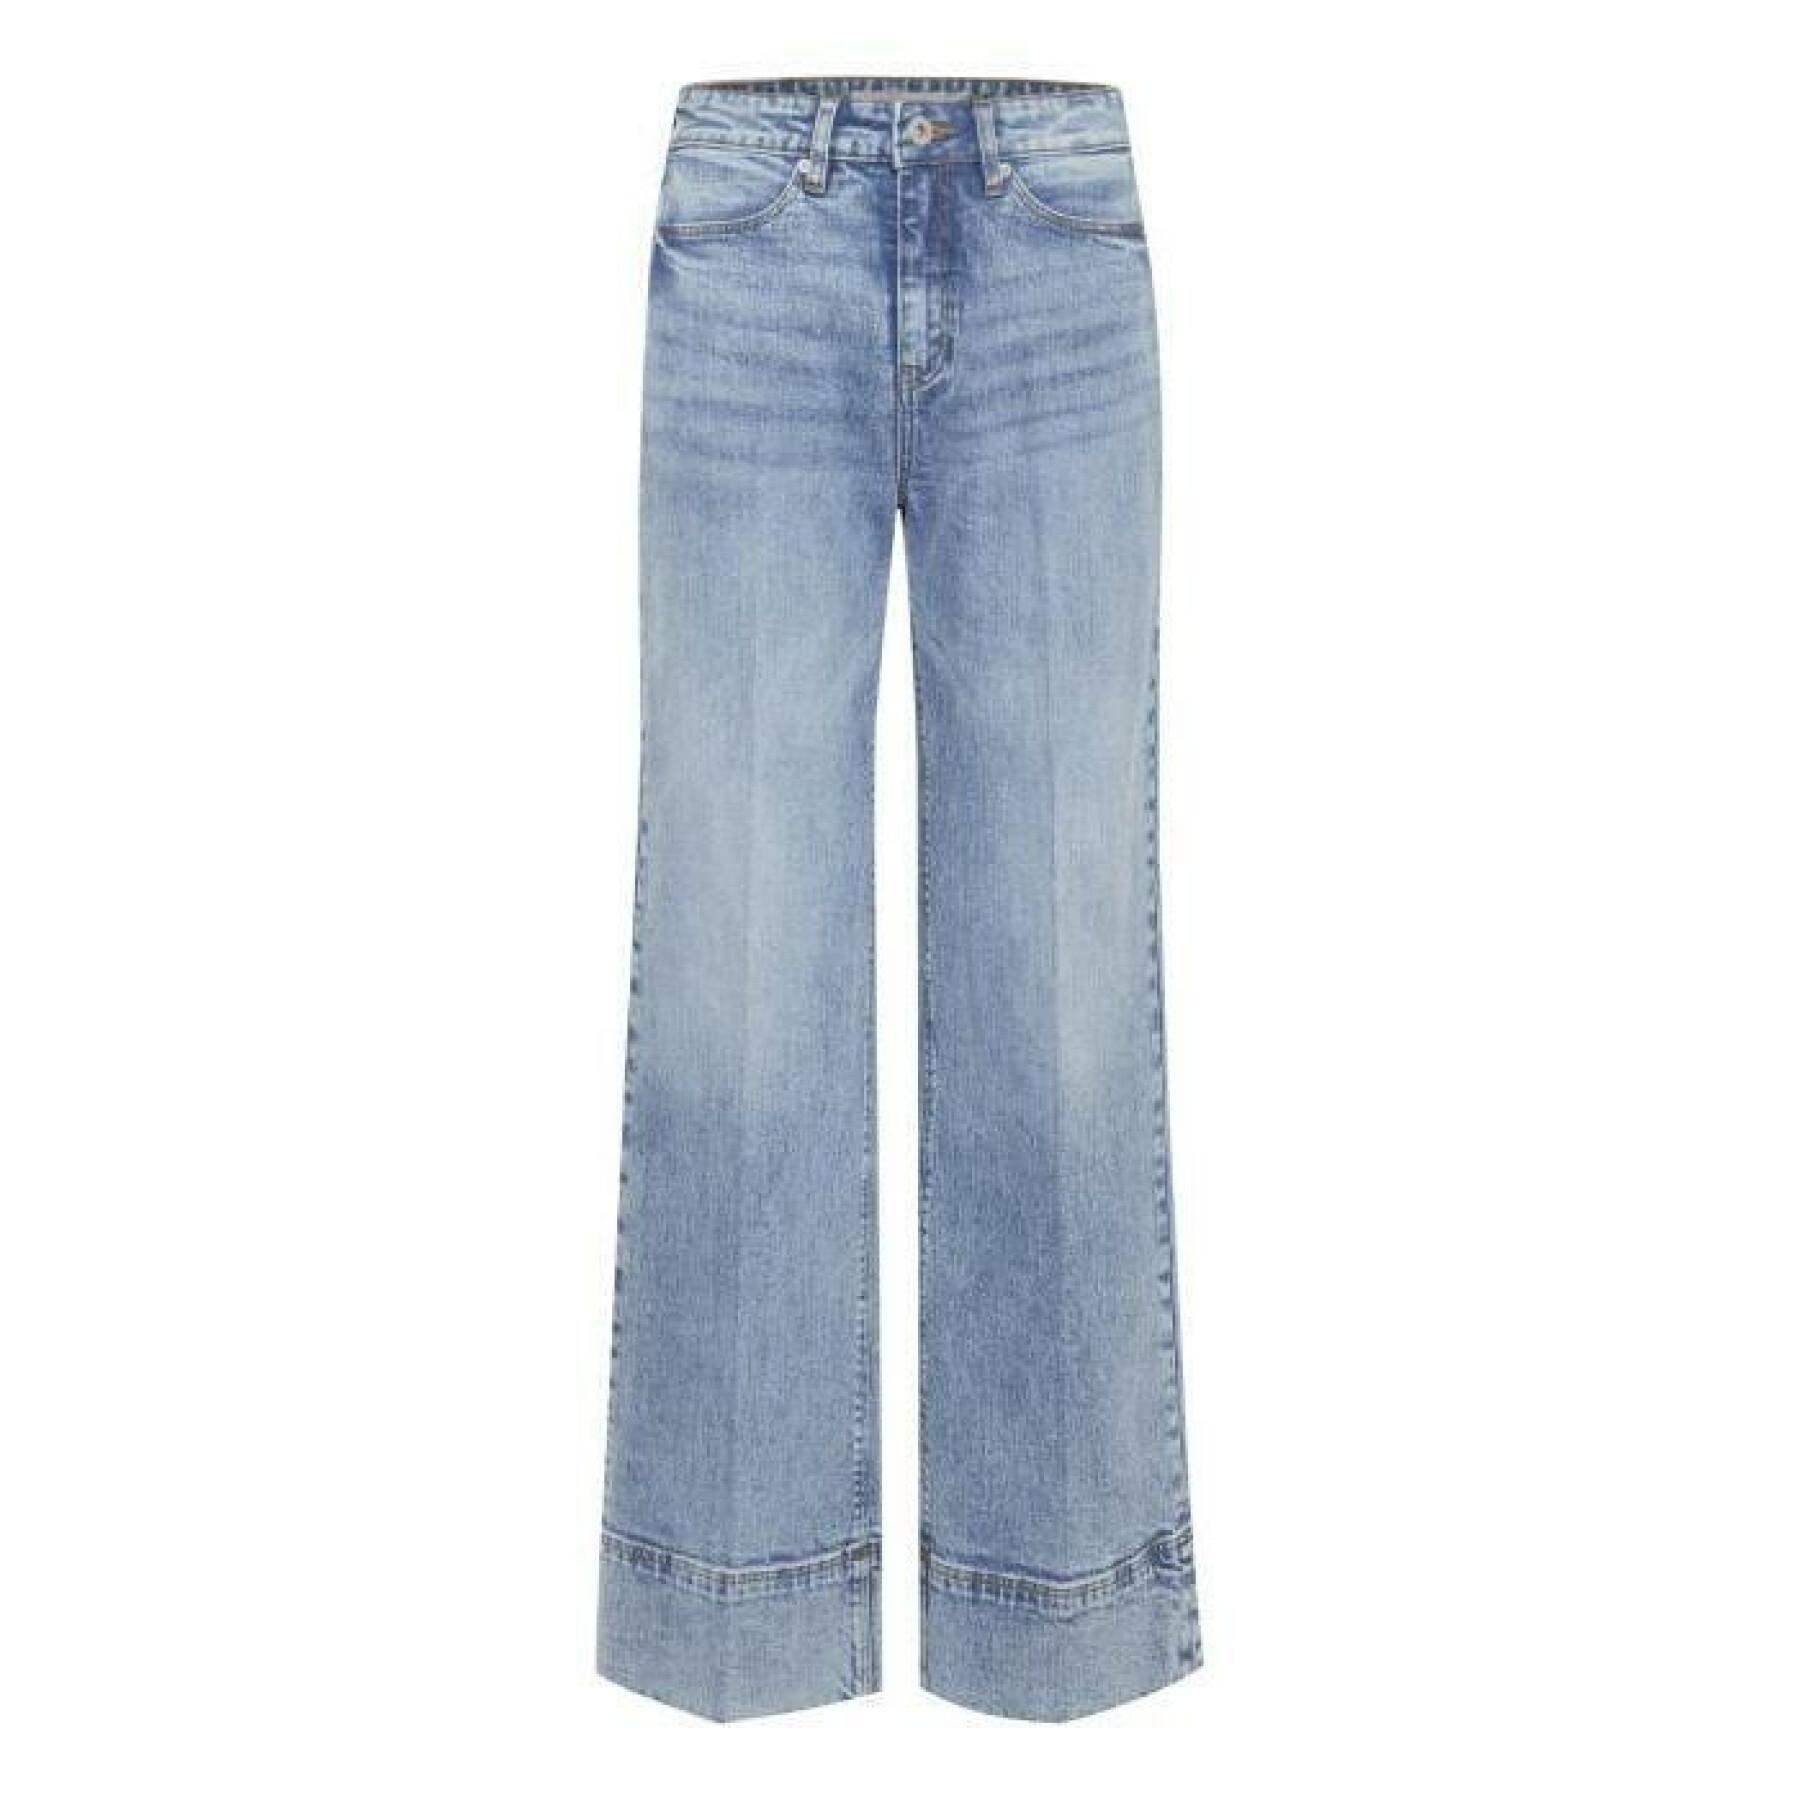 Women's flare jeans Ichi Ihmiffe - Nti